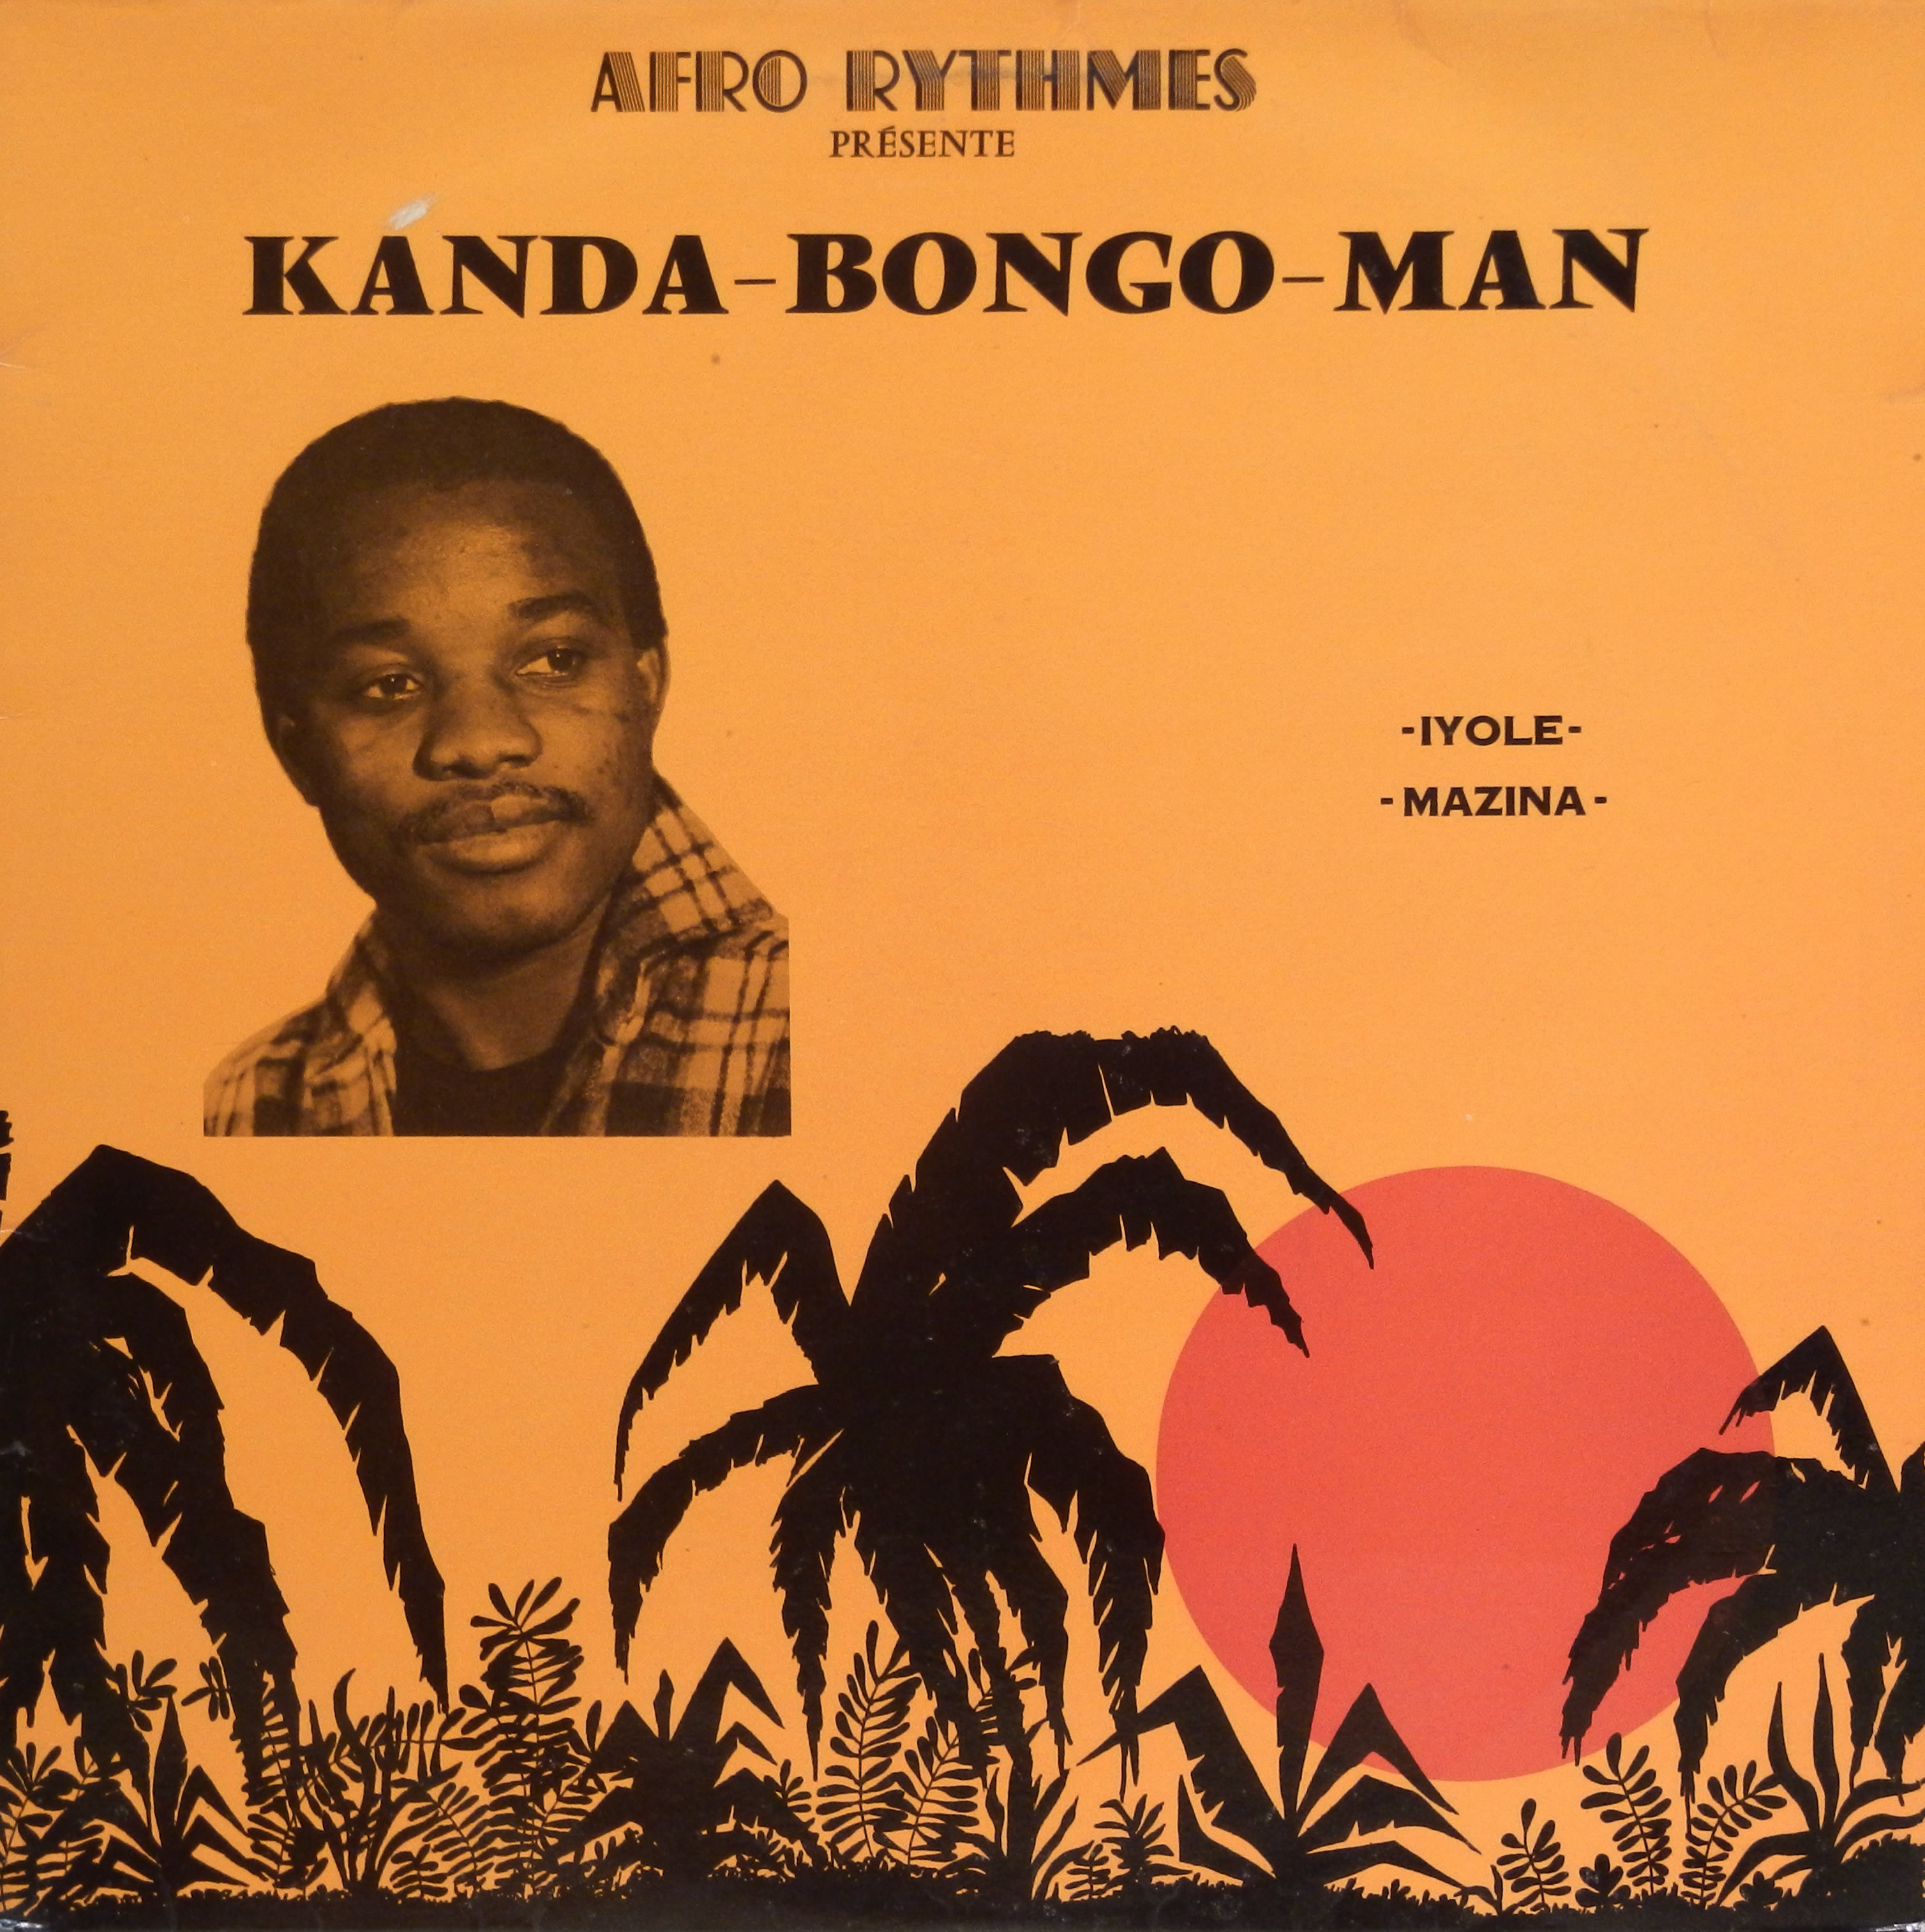 Afro Rythmes présente, Kanda-Bongo-Man, Afro Rythmes 1981 Kanda-Bongo-Man-front